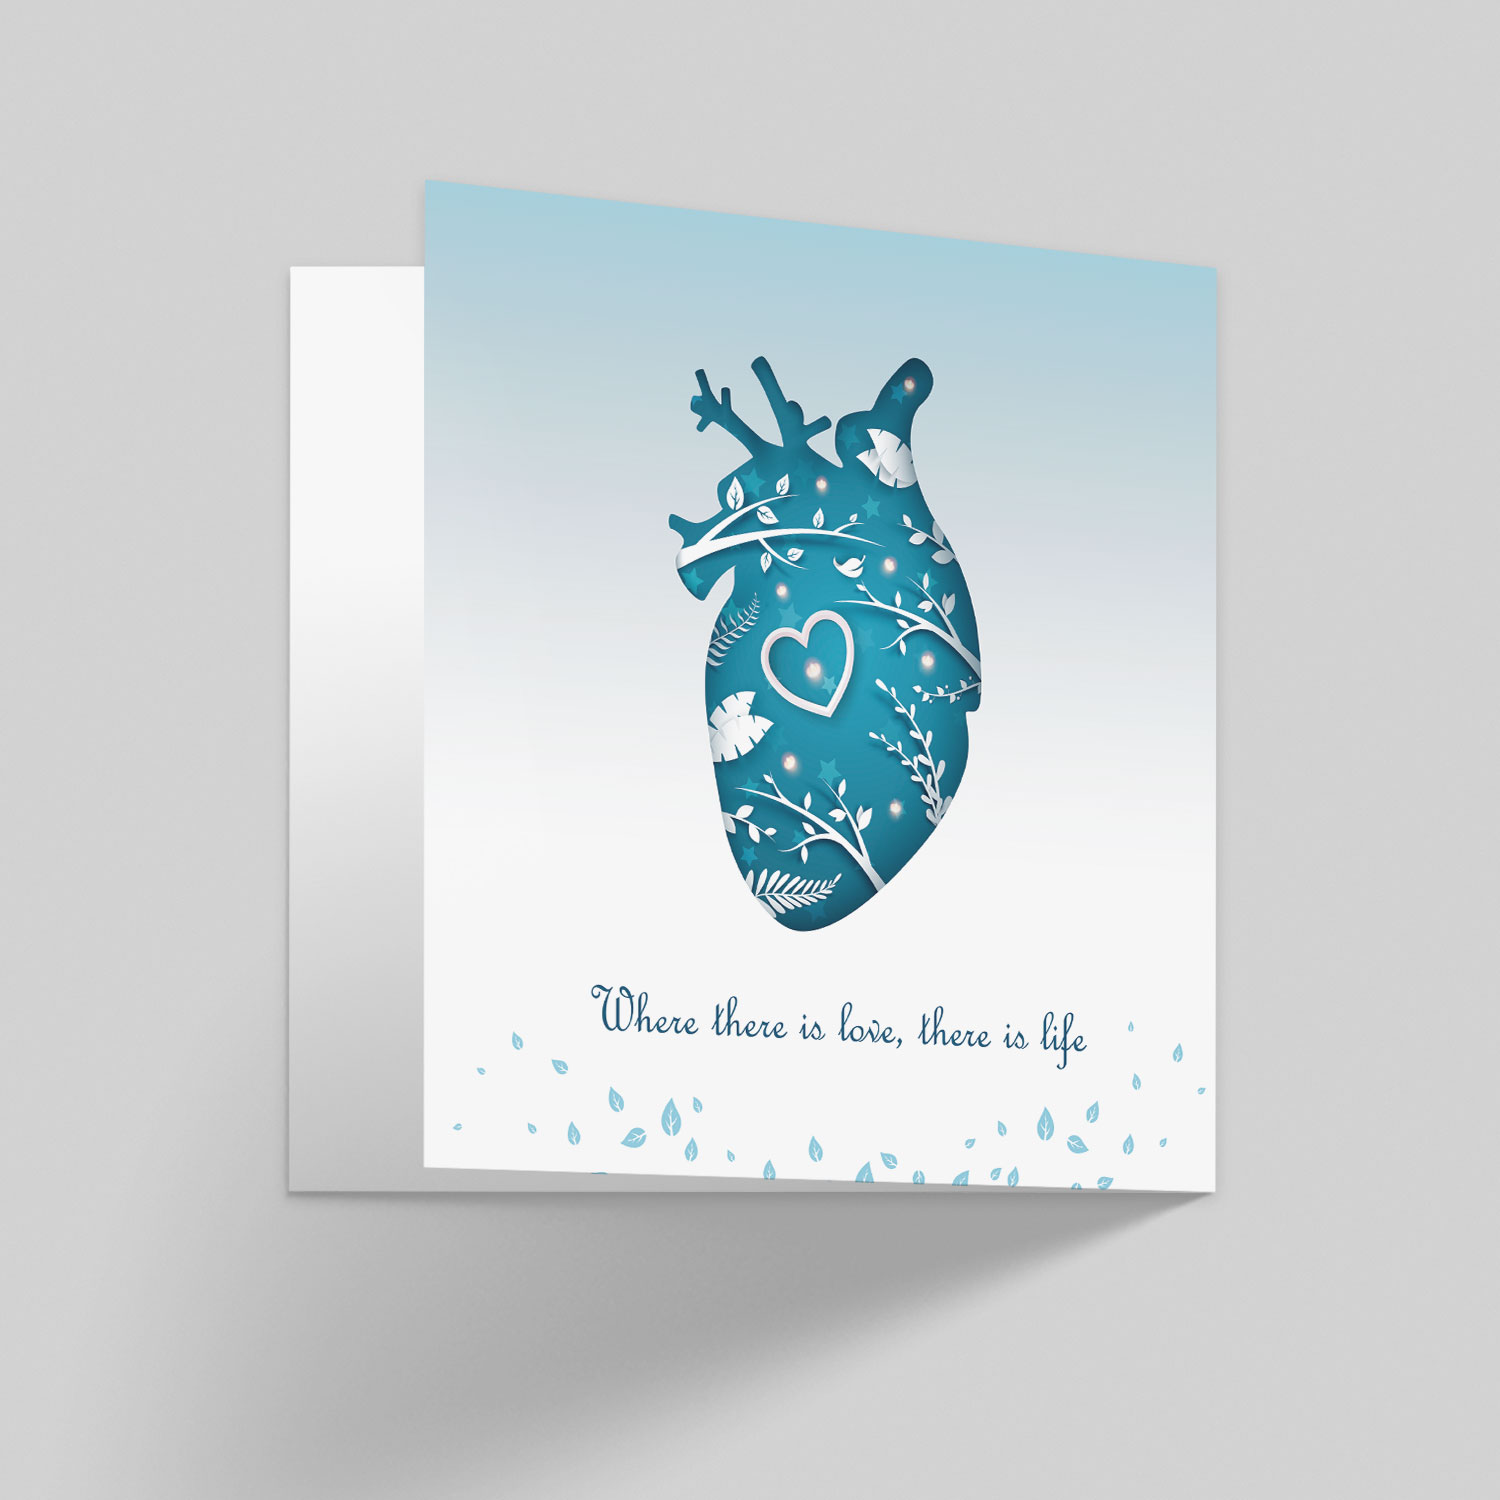 کارت تبریک ولنتاین با طرح قلب آبی